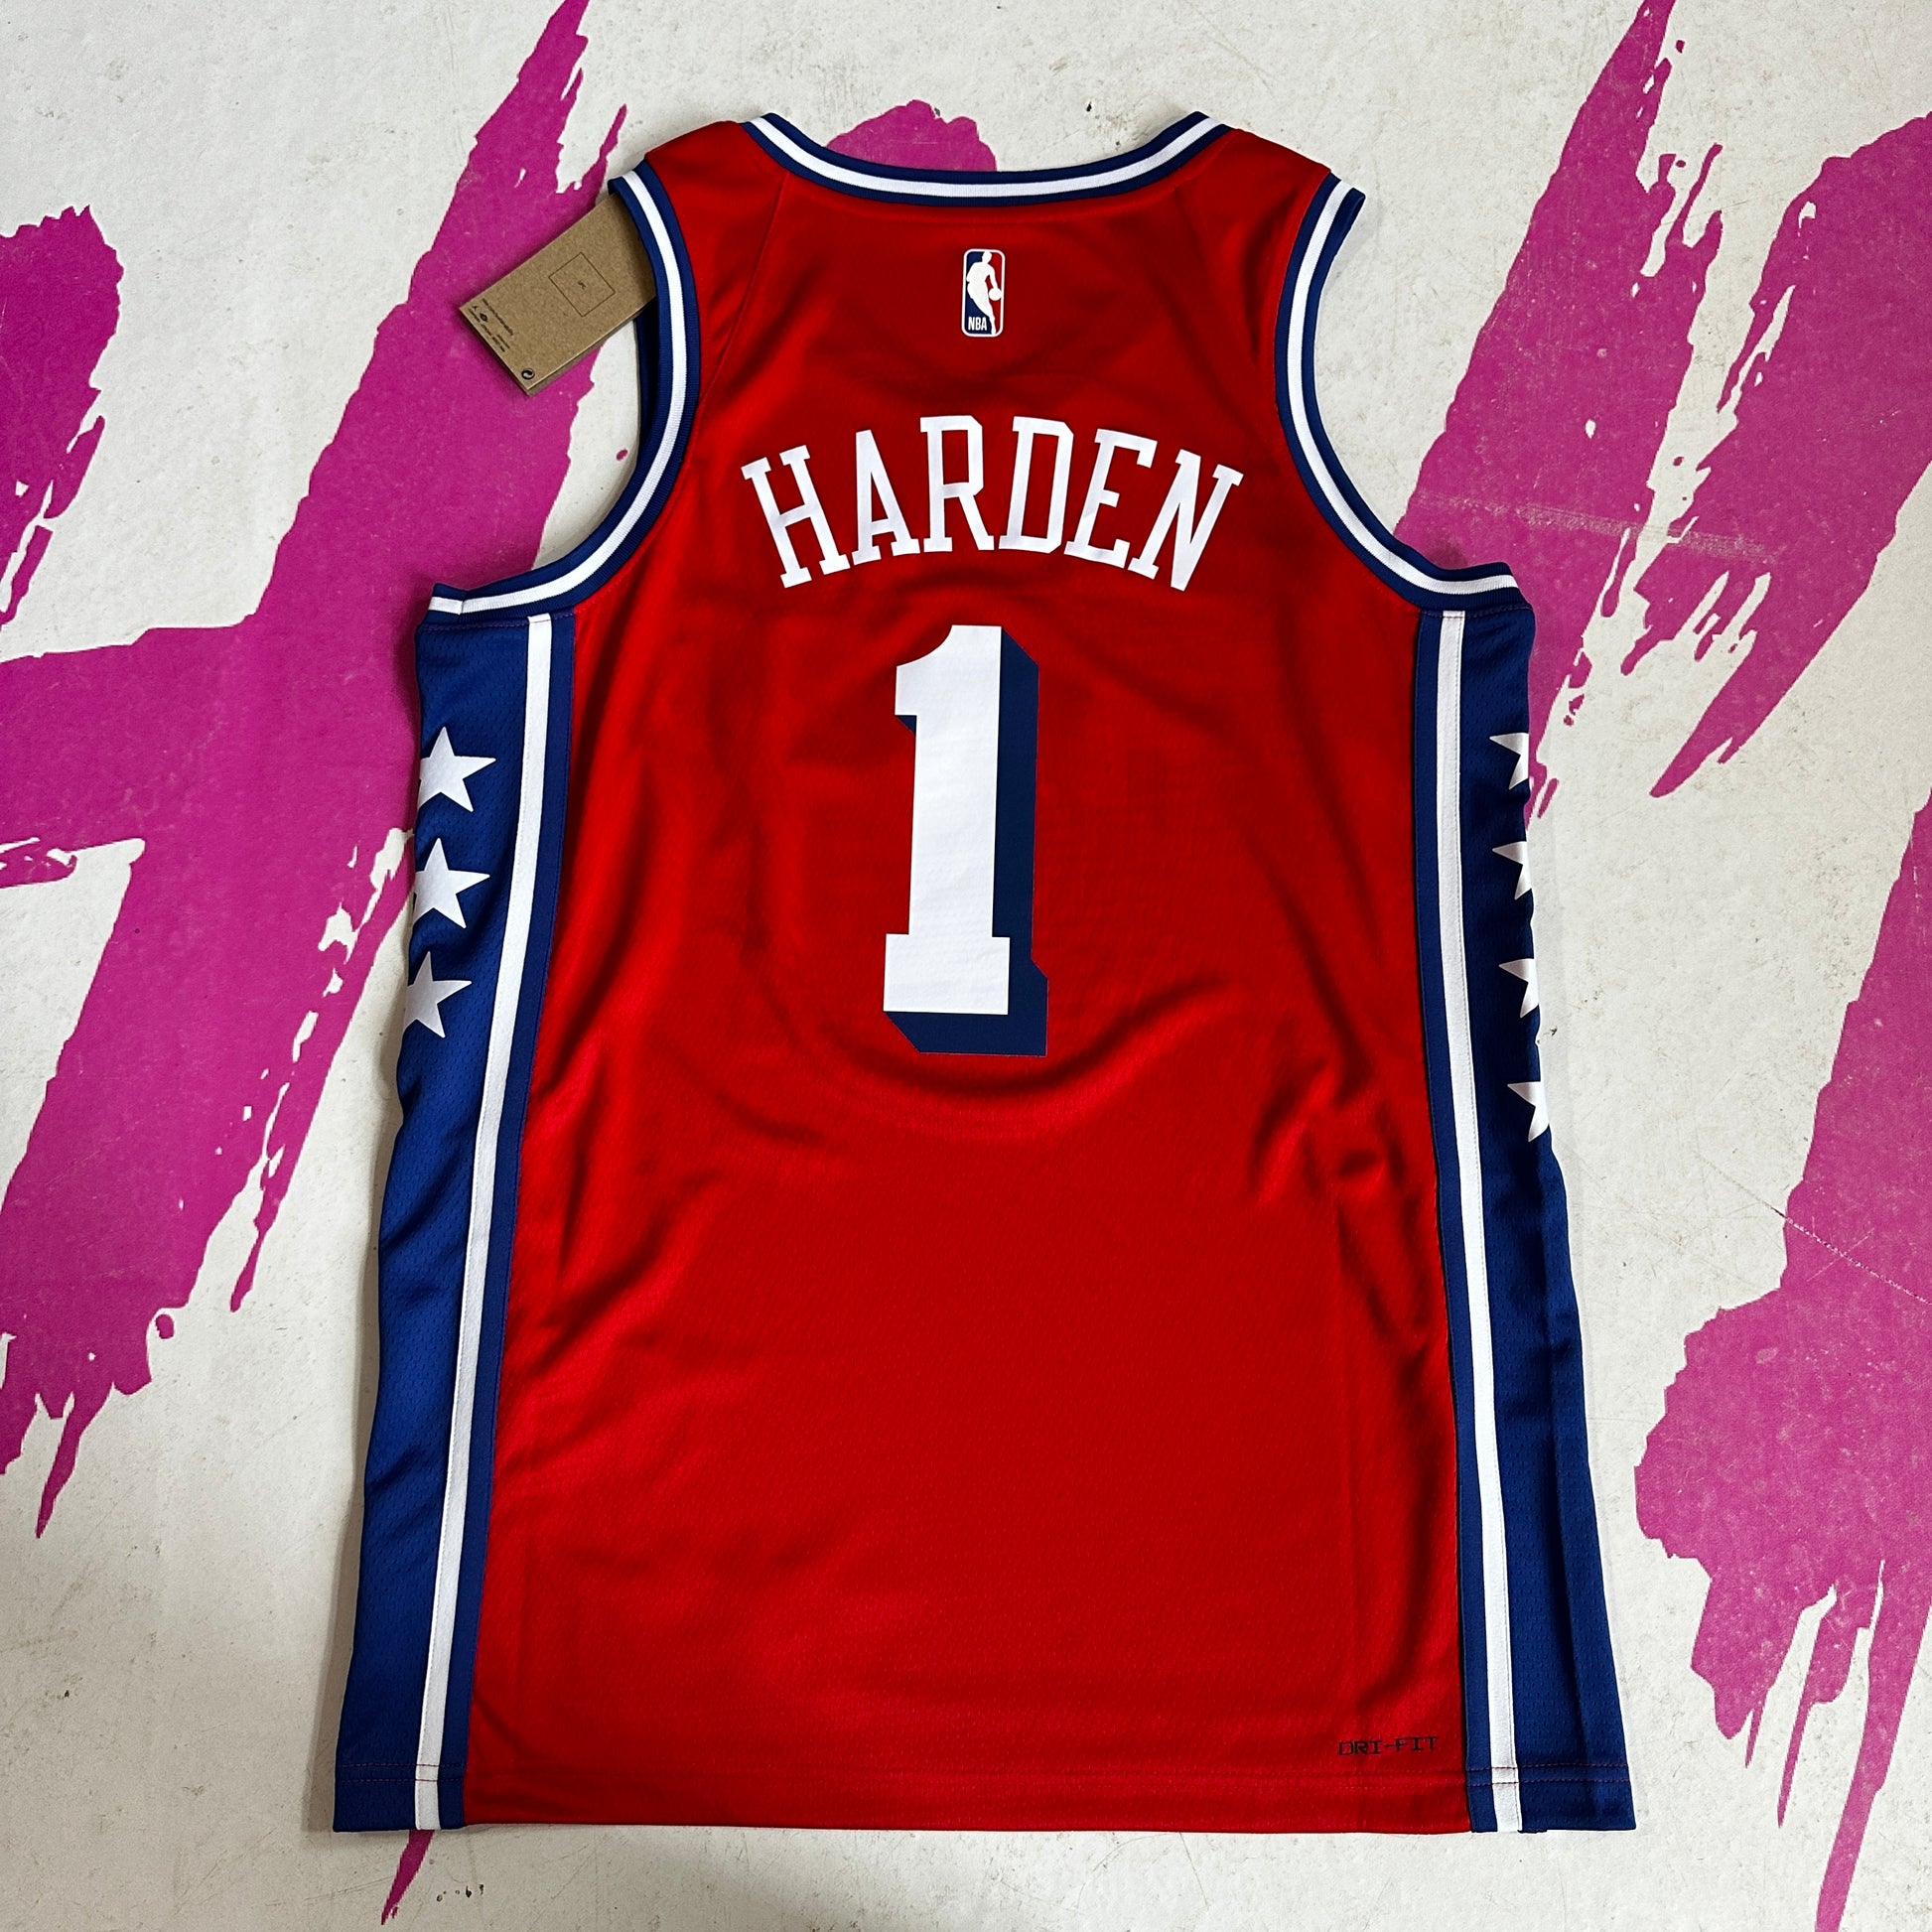 Nike James Harden Philadelphia 76ers City Edition Men's Dri-Fit NBA Swingman Jersey White/Blue